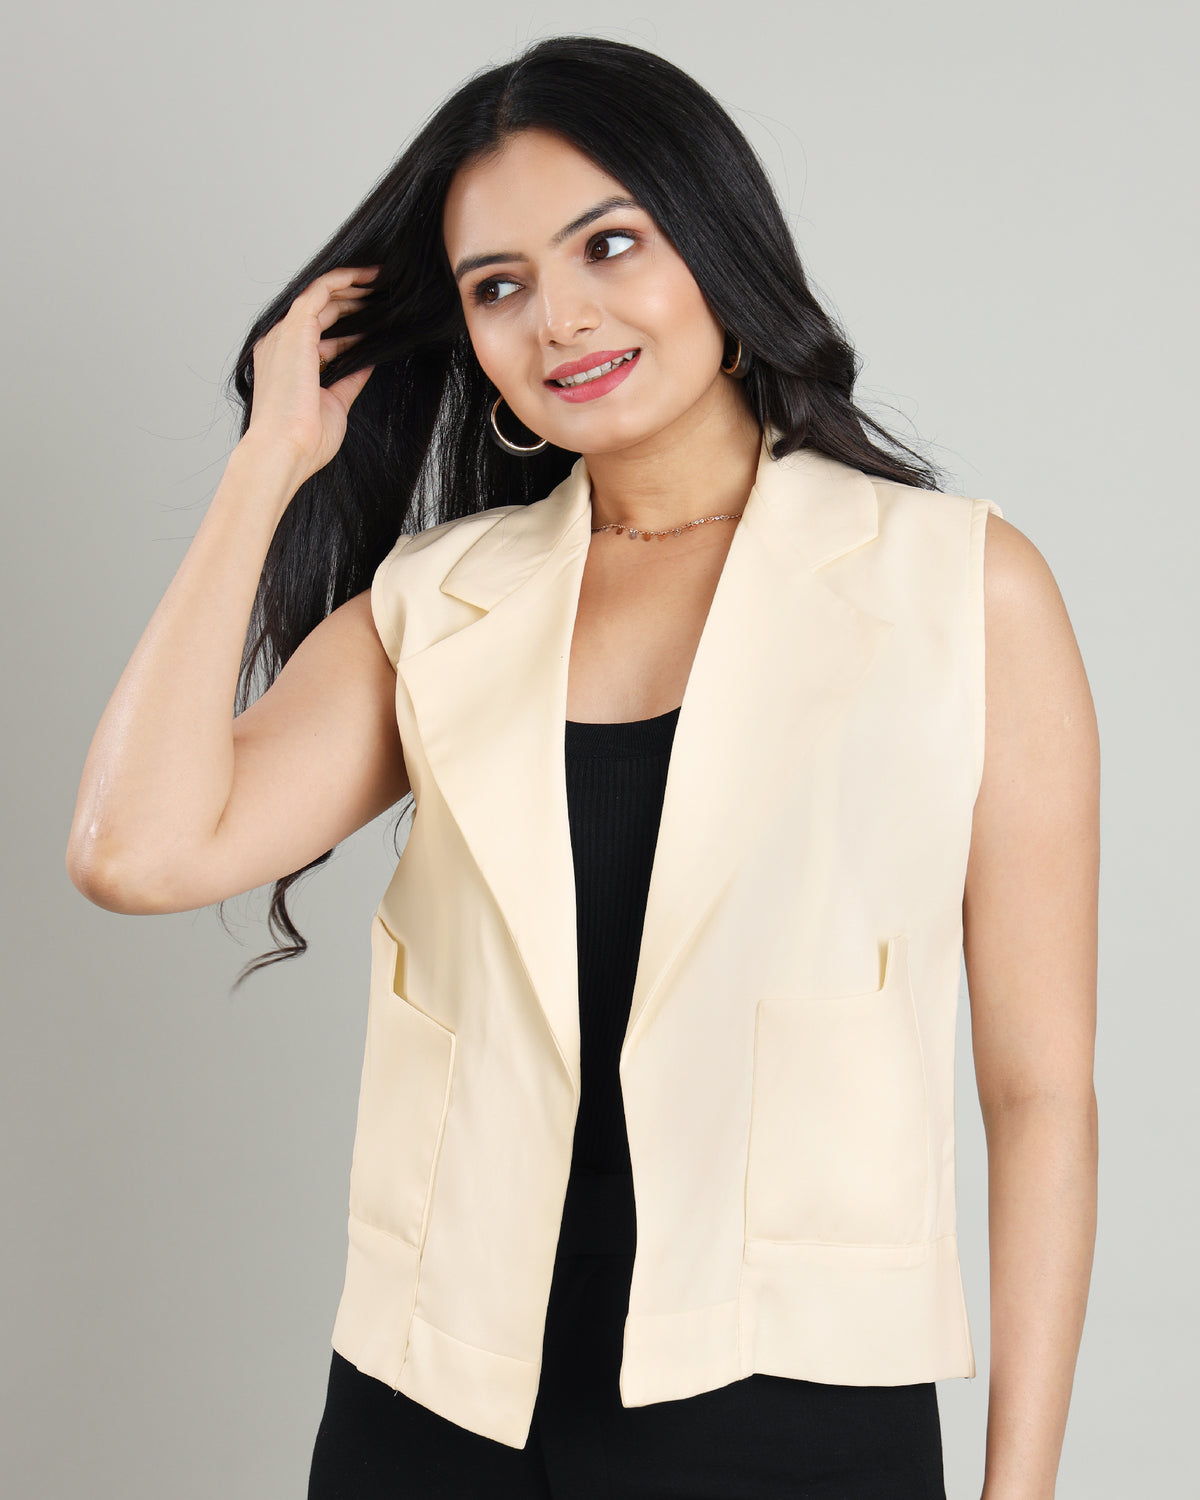 Women's Sleeveless Jacket For Posh Look